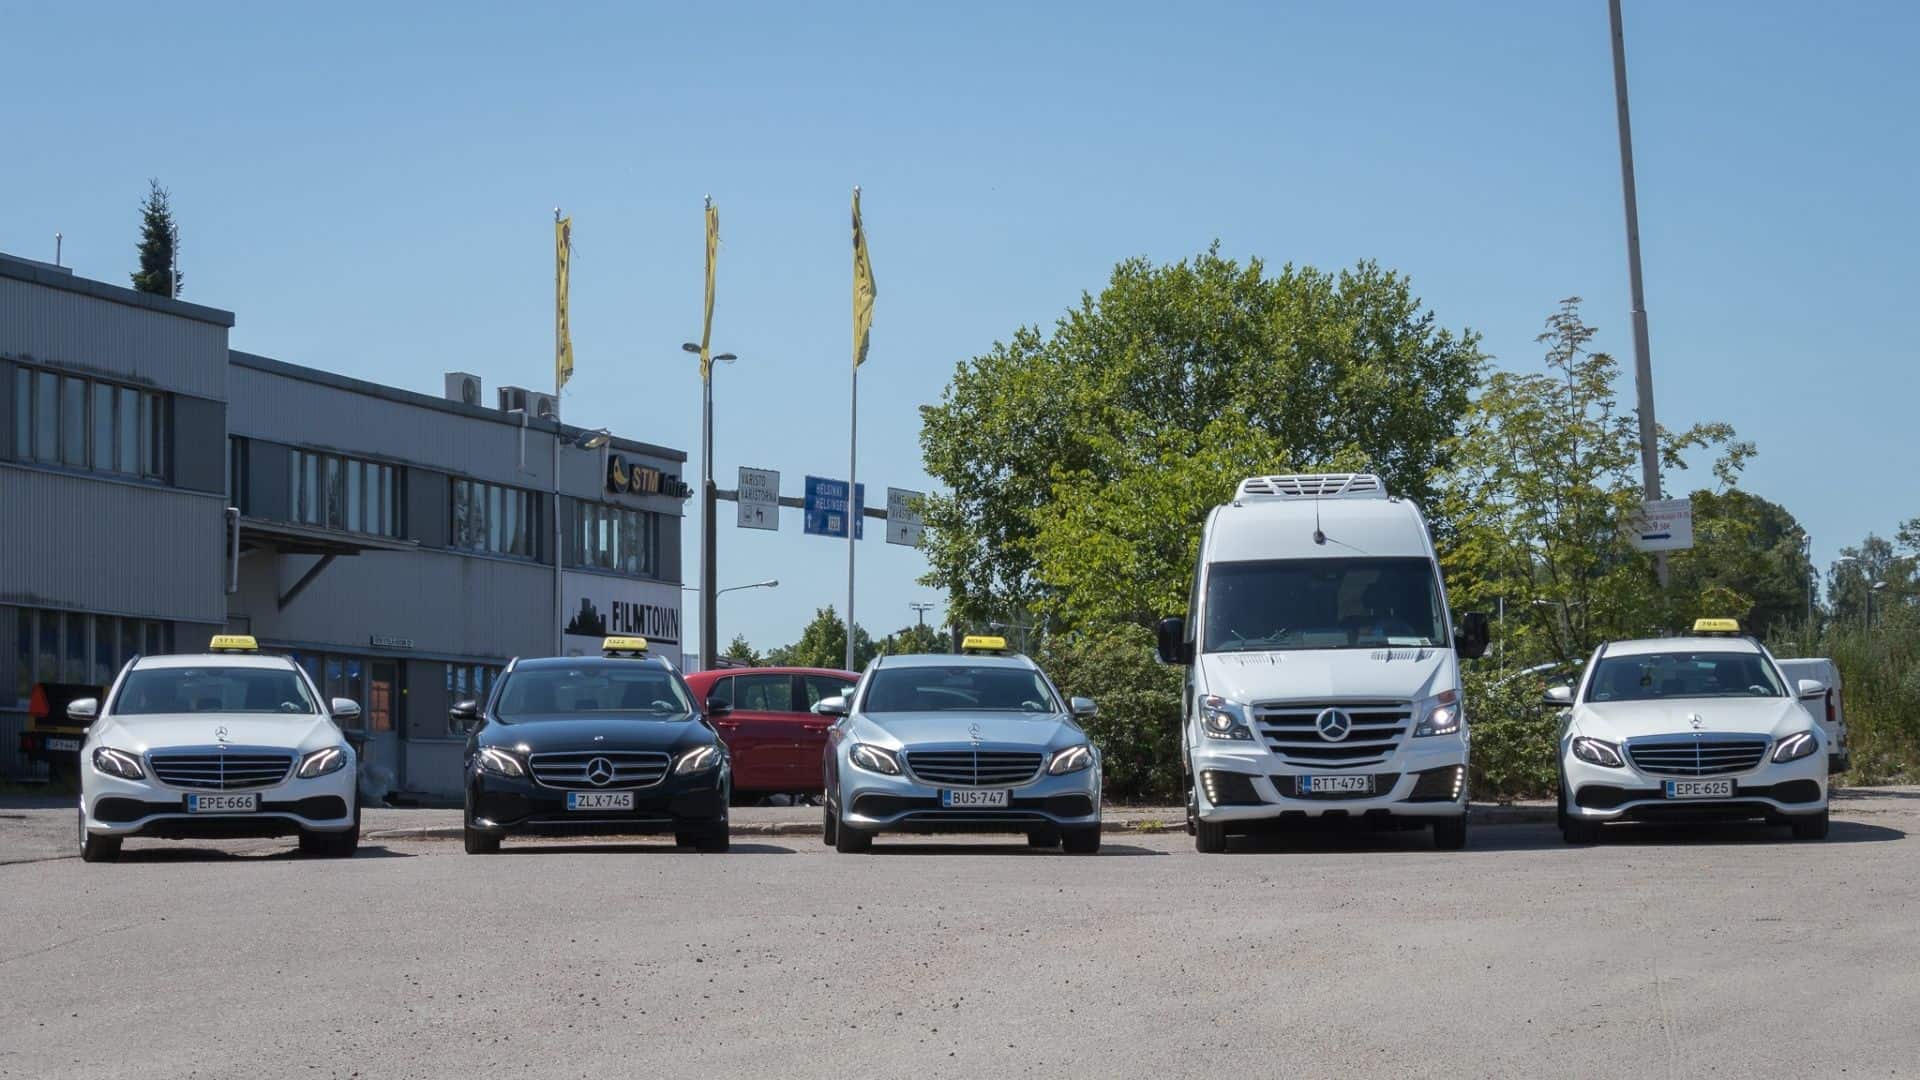 Tilausajo Pitkänen Vehicles Taxi Services Airport Taxi